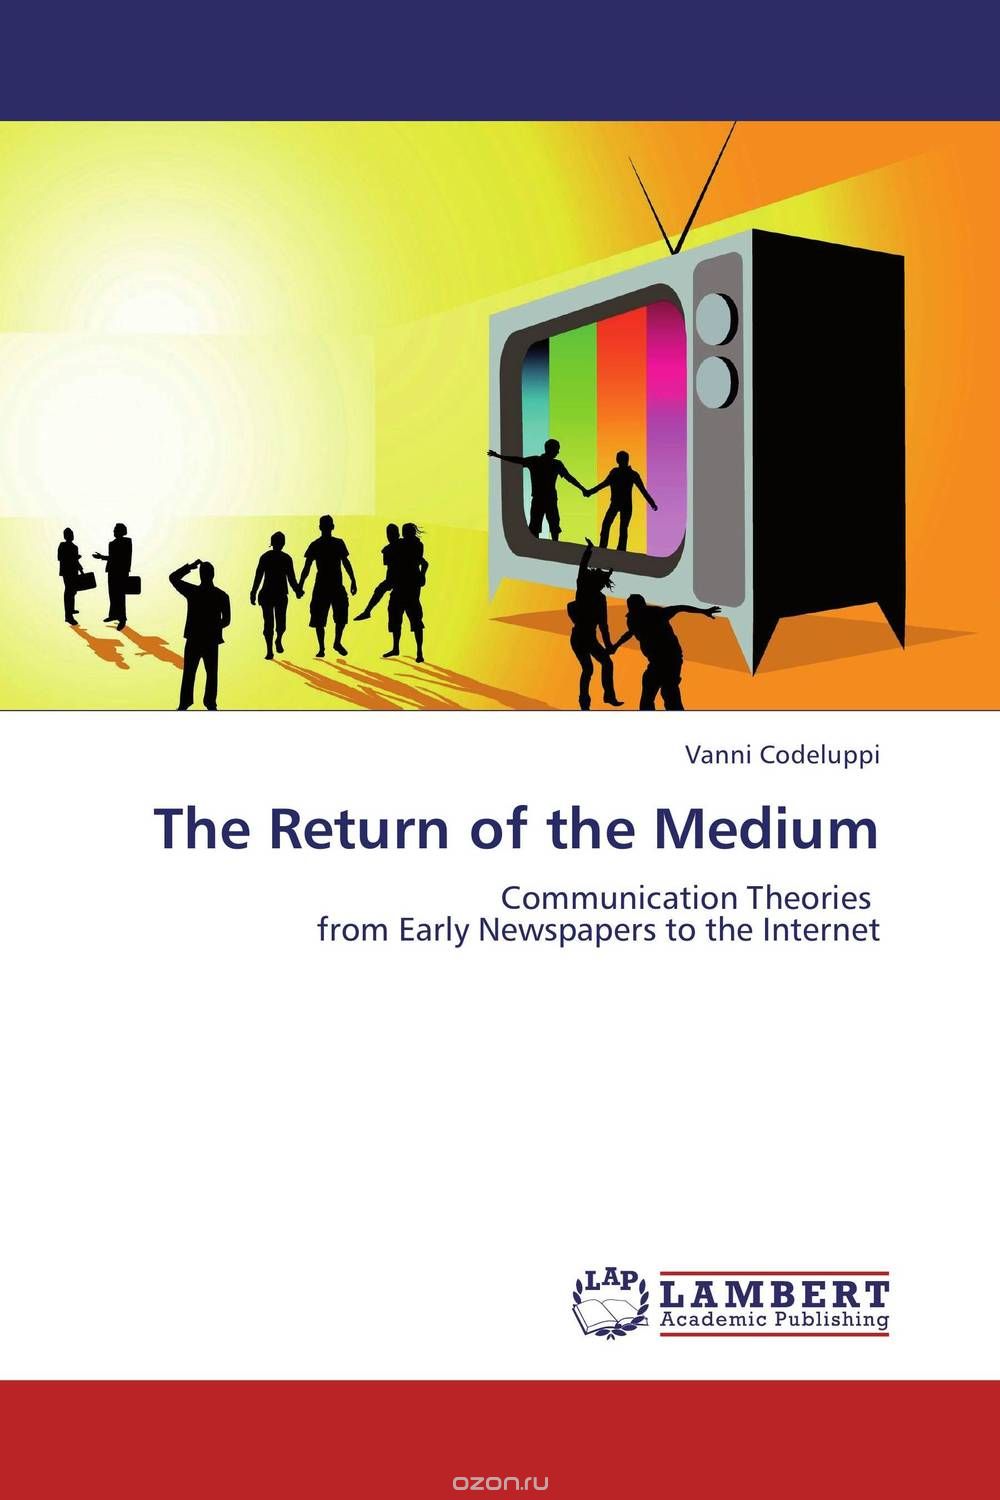 Скачать книгу "The Return of the Medium"